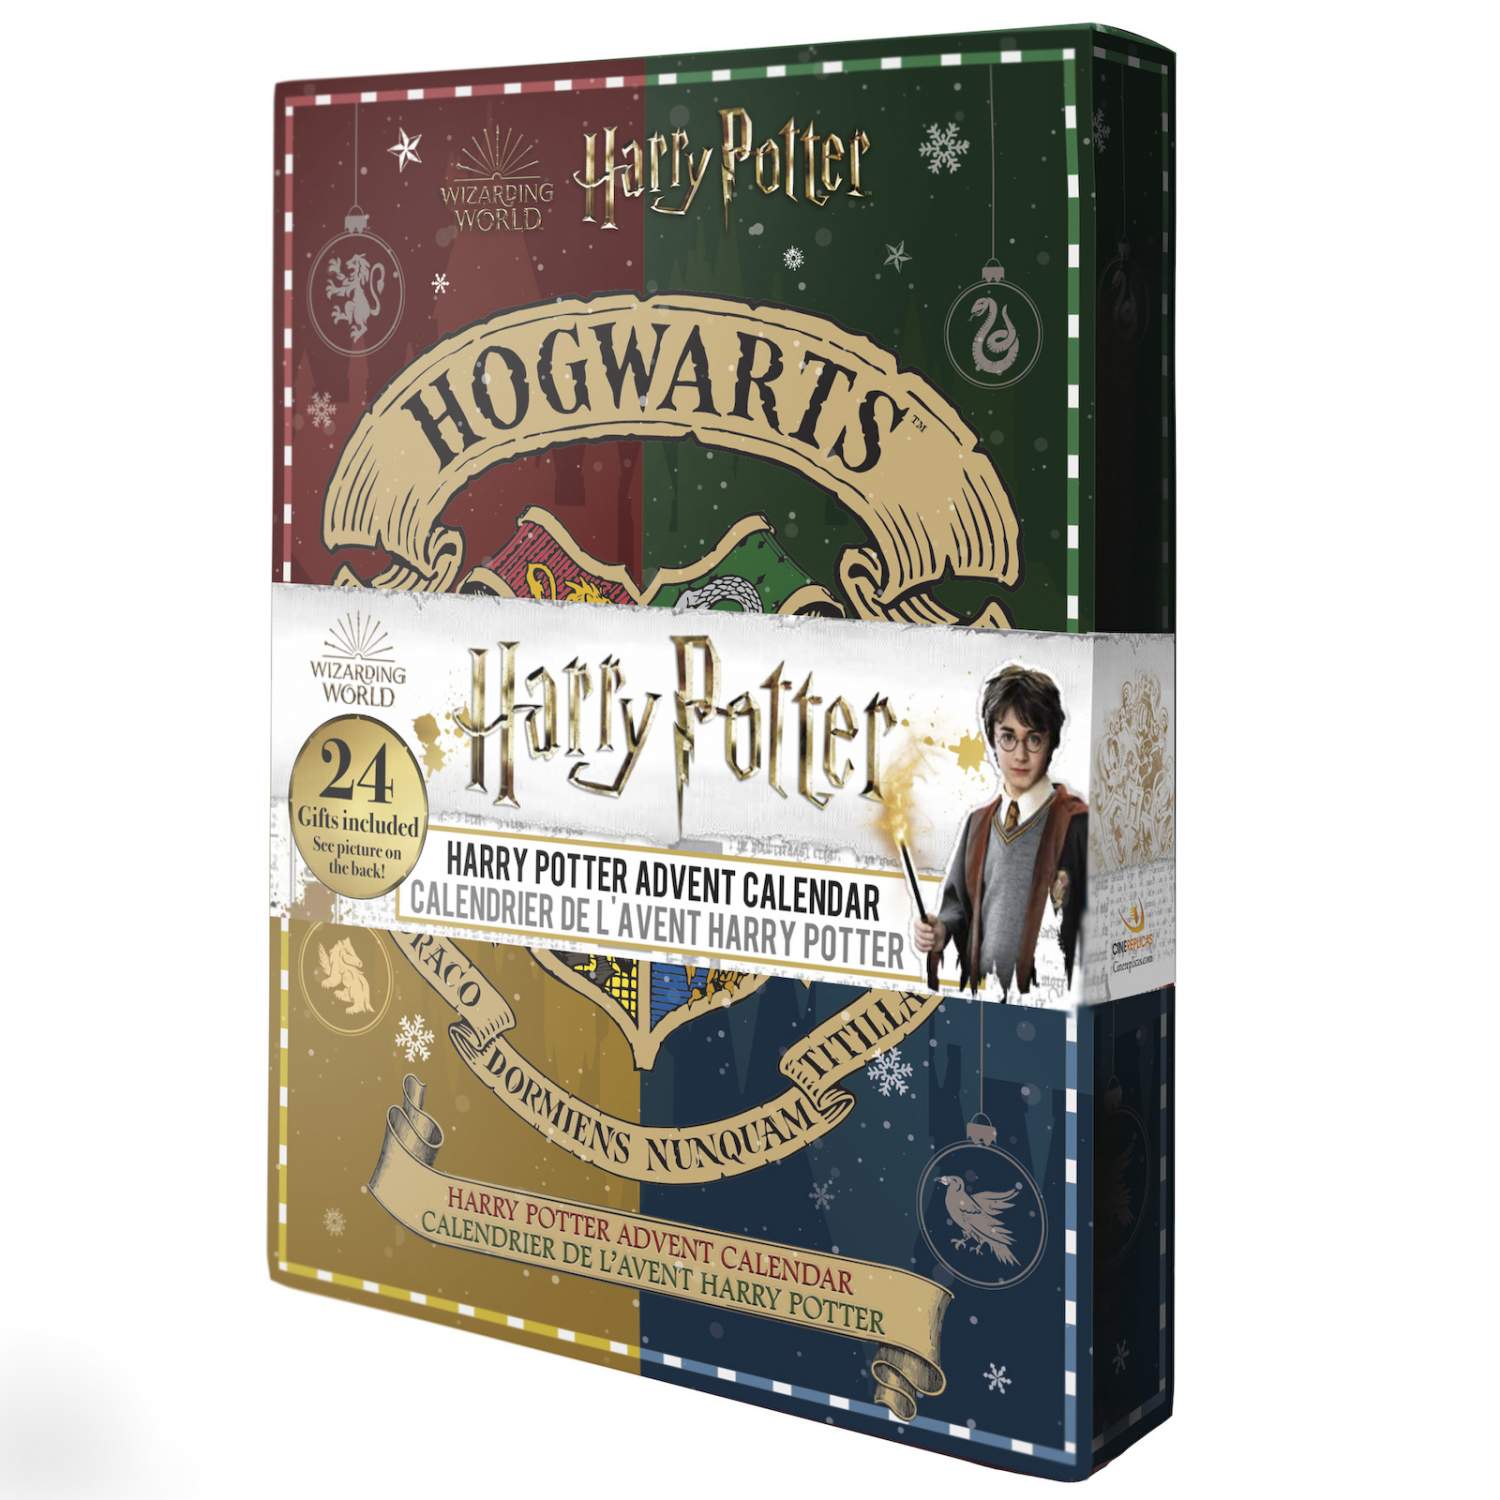 Адвент календарь Cinereplicas Гарри Поттер (Harry Potter) Новый год 2022 -  отзывы покупателей на маркетплейсе Мегамаркет | Артикул: 600004728757